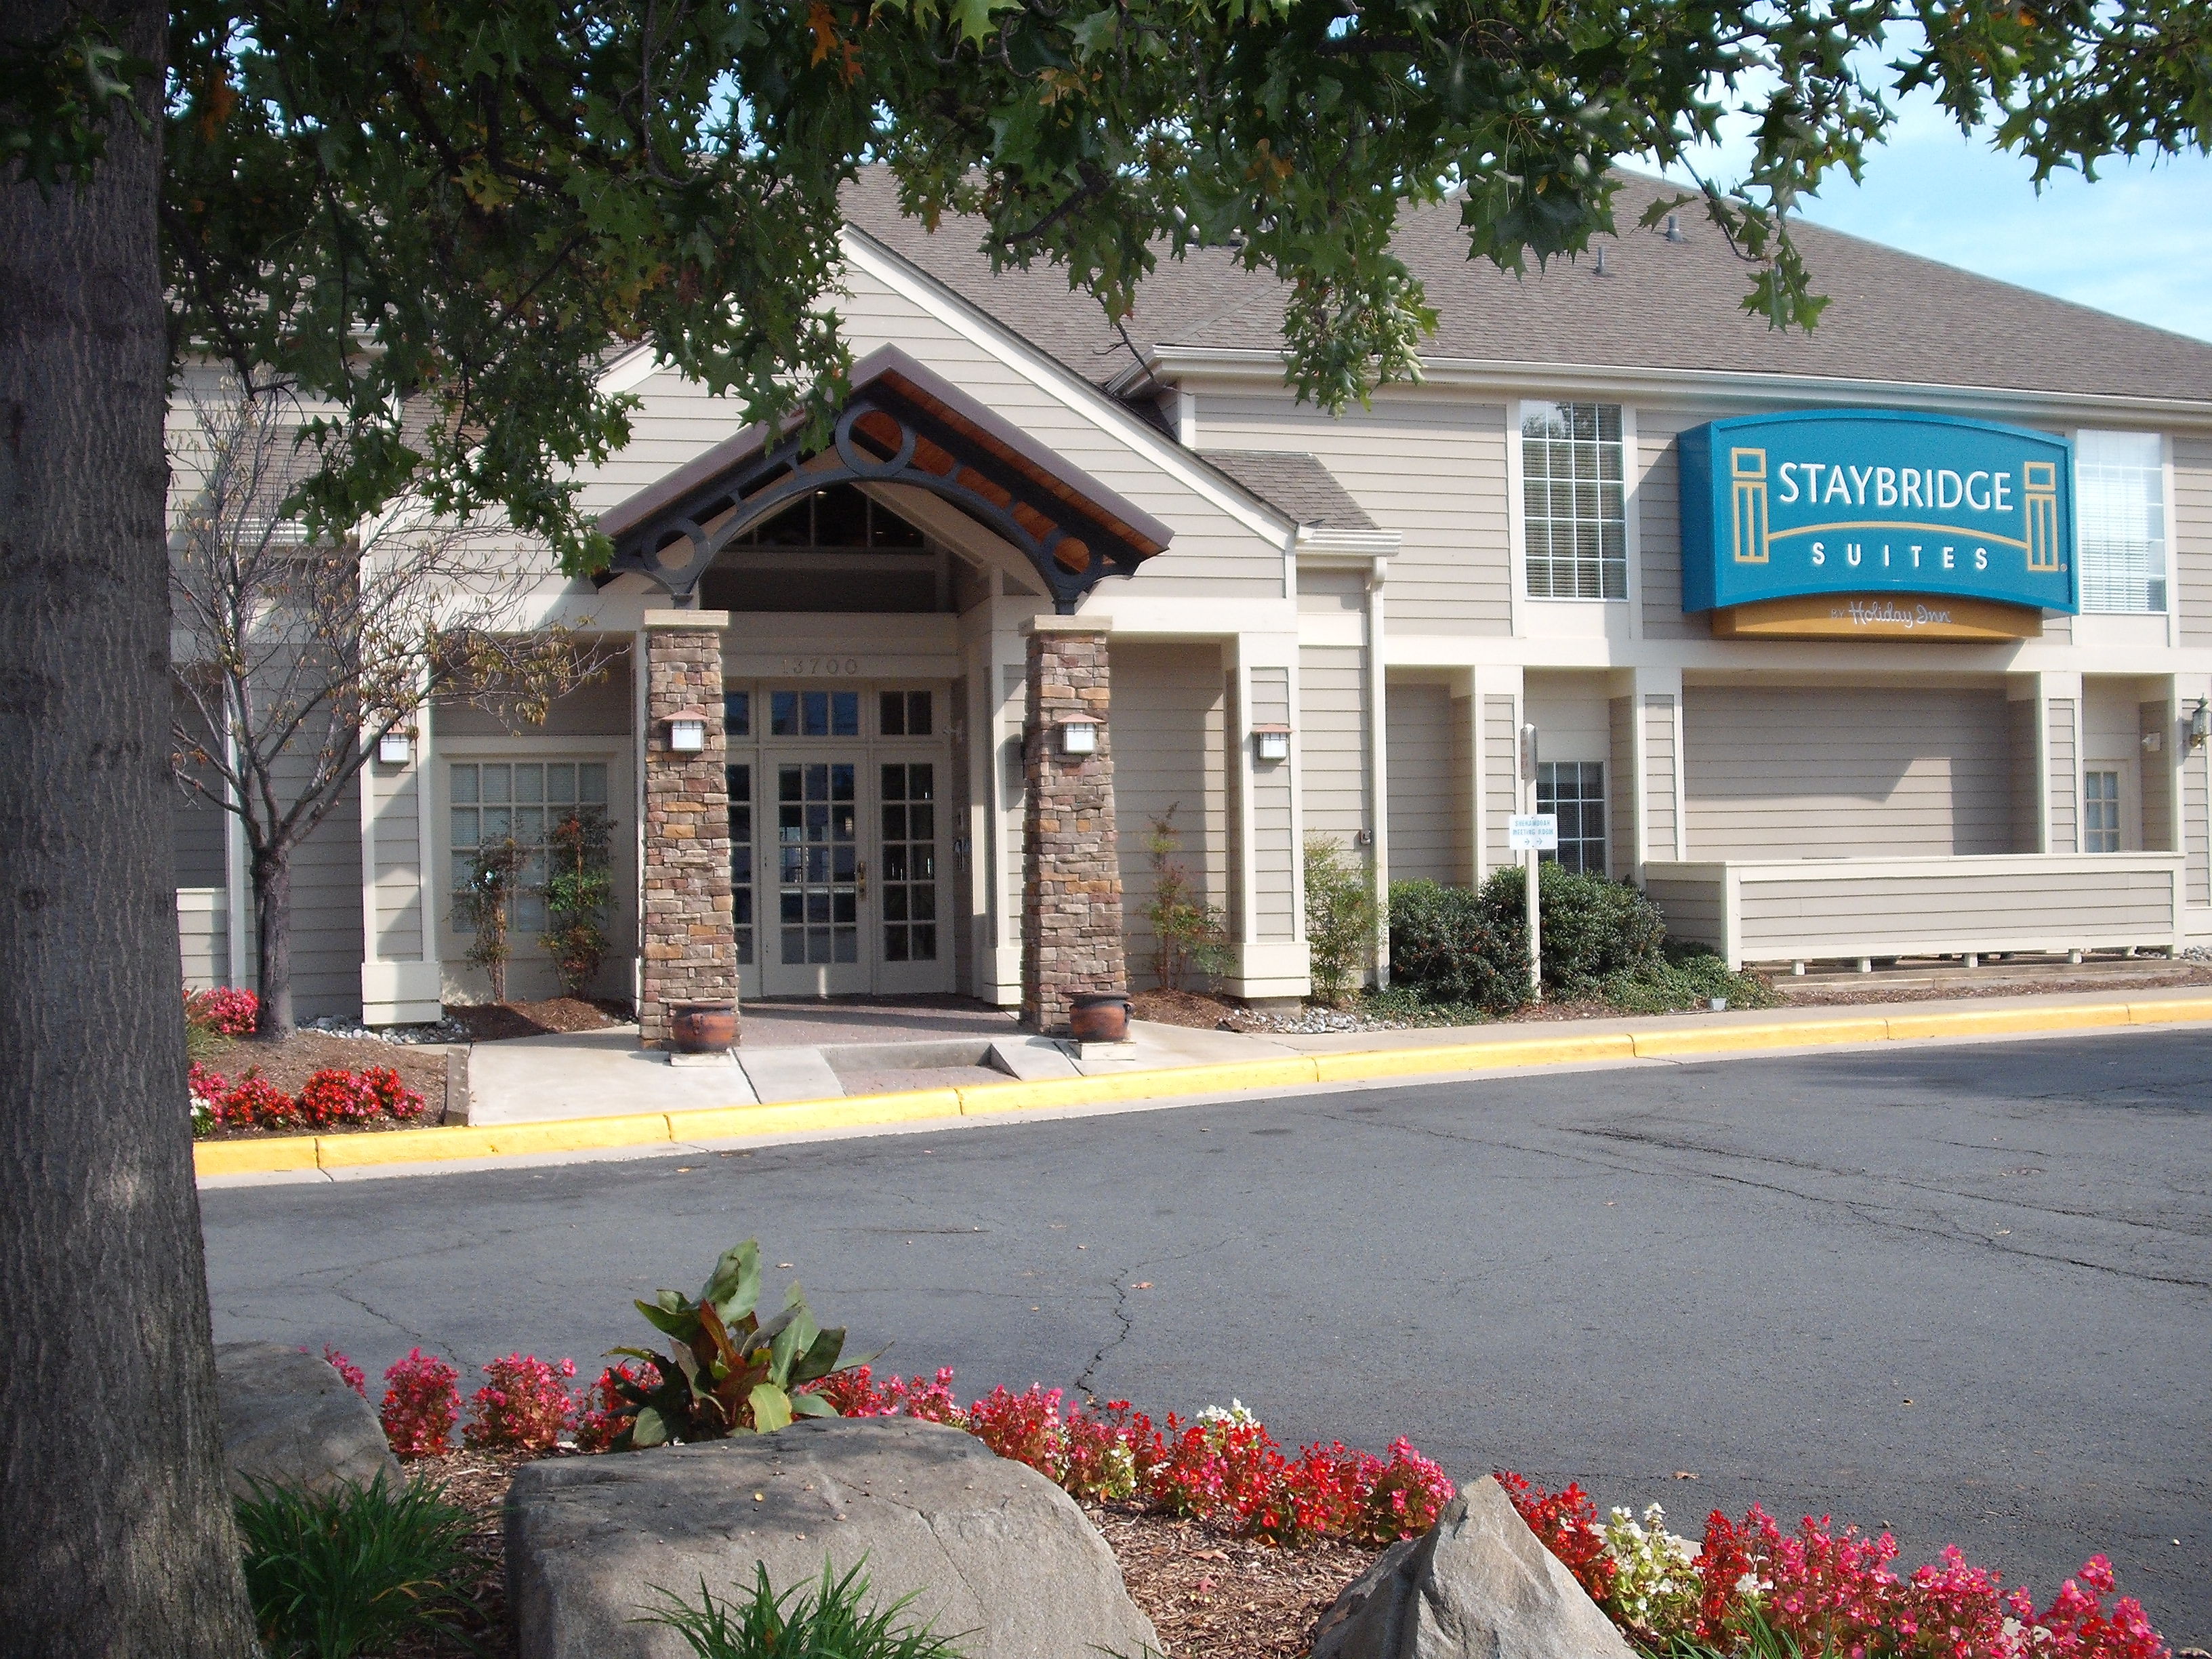 Photo of Staybridge Suites Herndon-Dulles, Herndon, VA